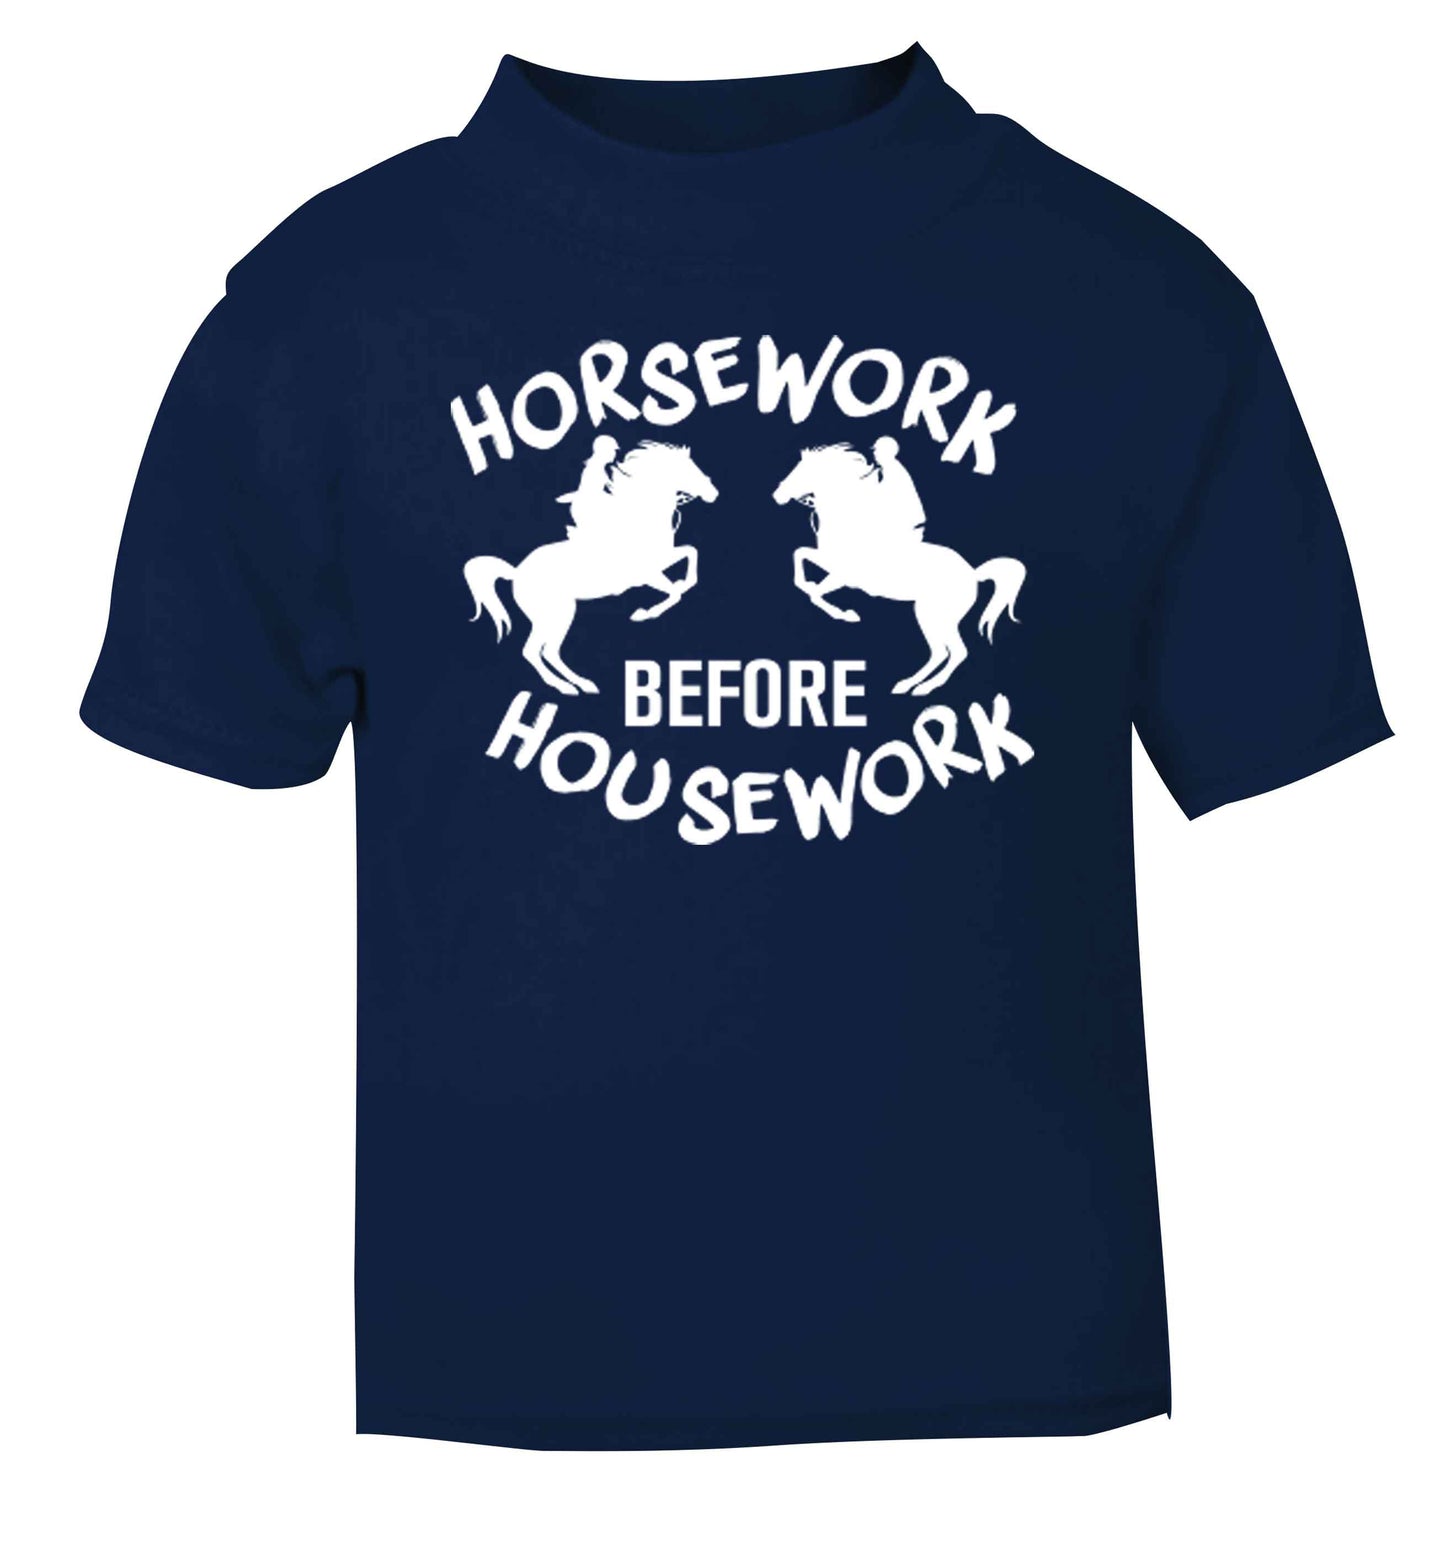 Horsework before housework navy baby toddler Tshirt 2 Years